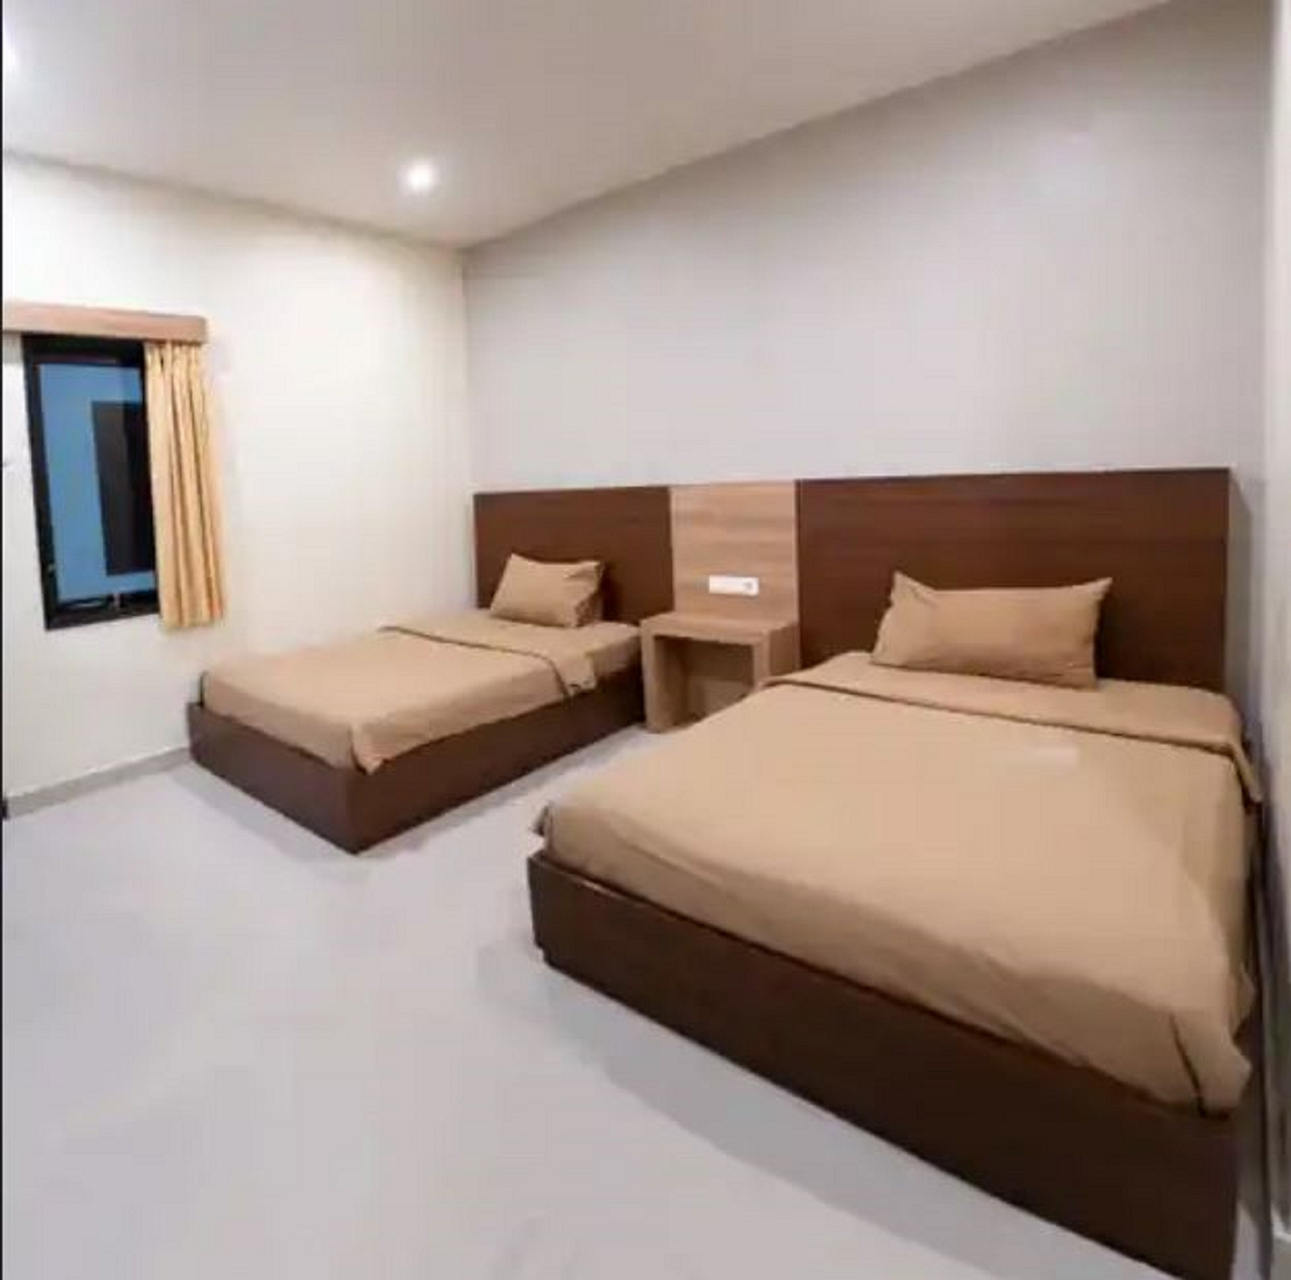 Bedroom 3, Rajawali Inn, Palu